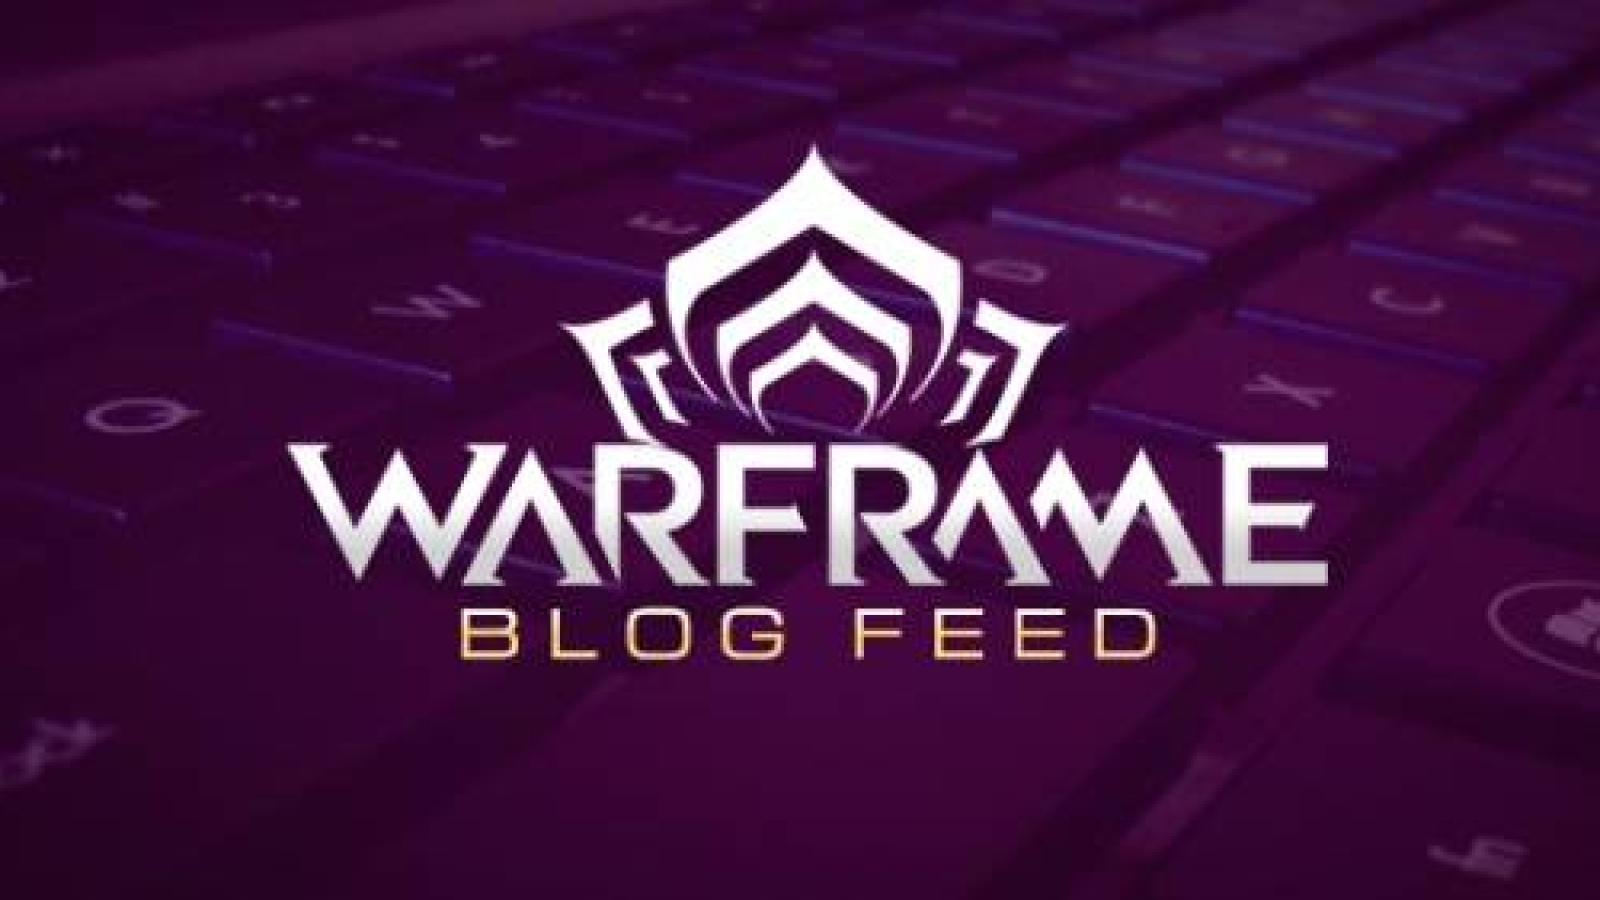 Welcome to Warframe's Blog Feed!